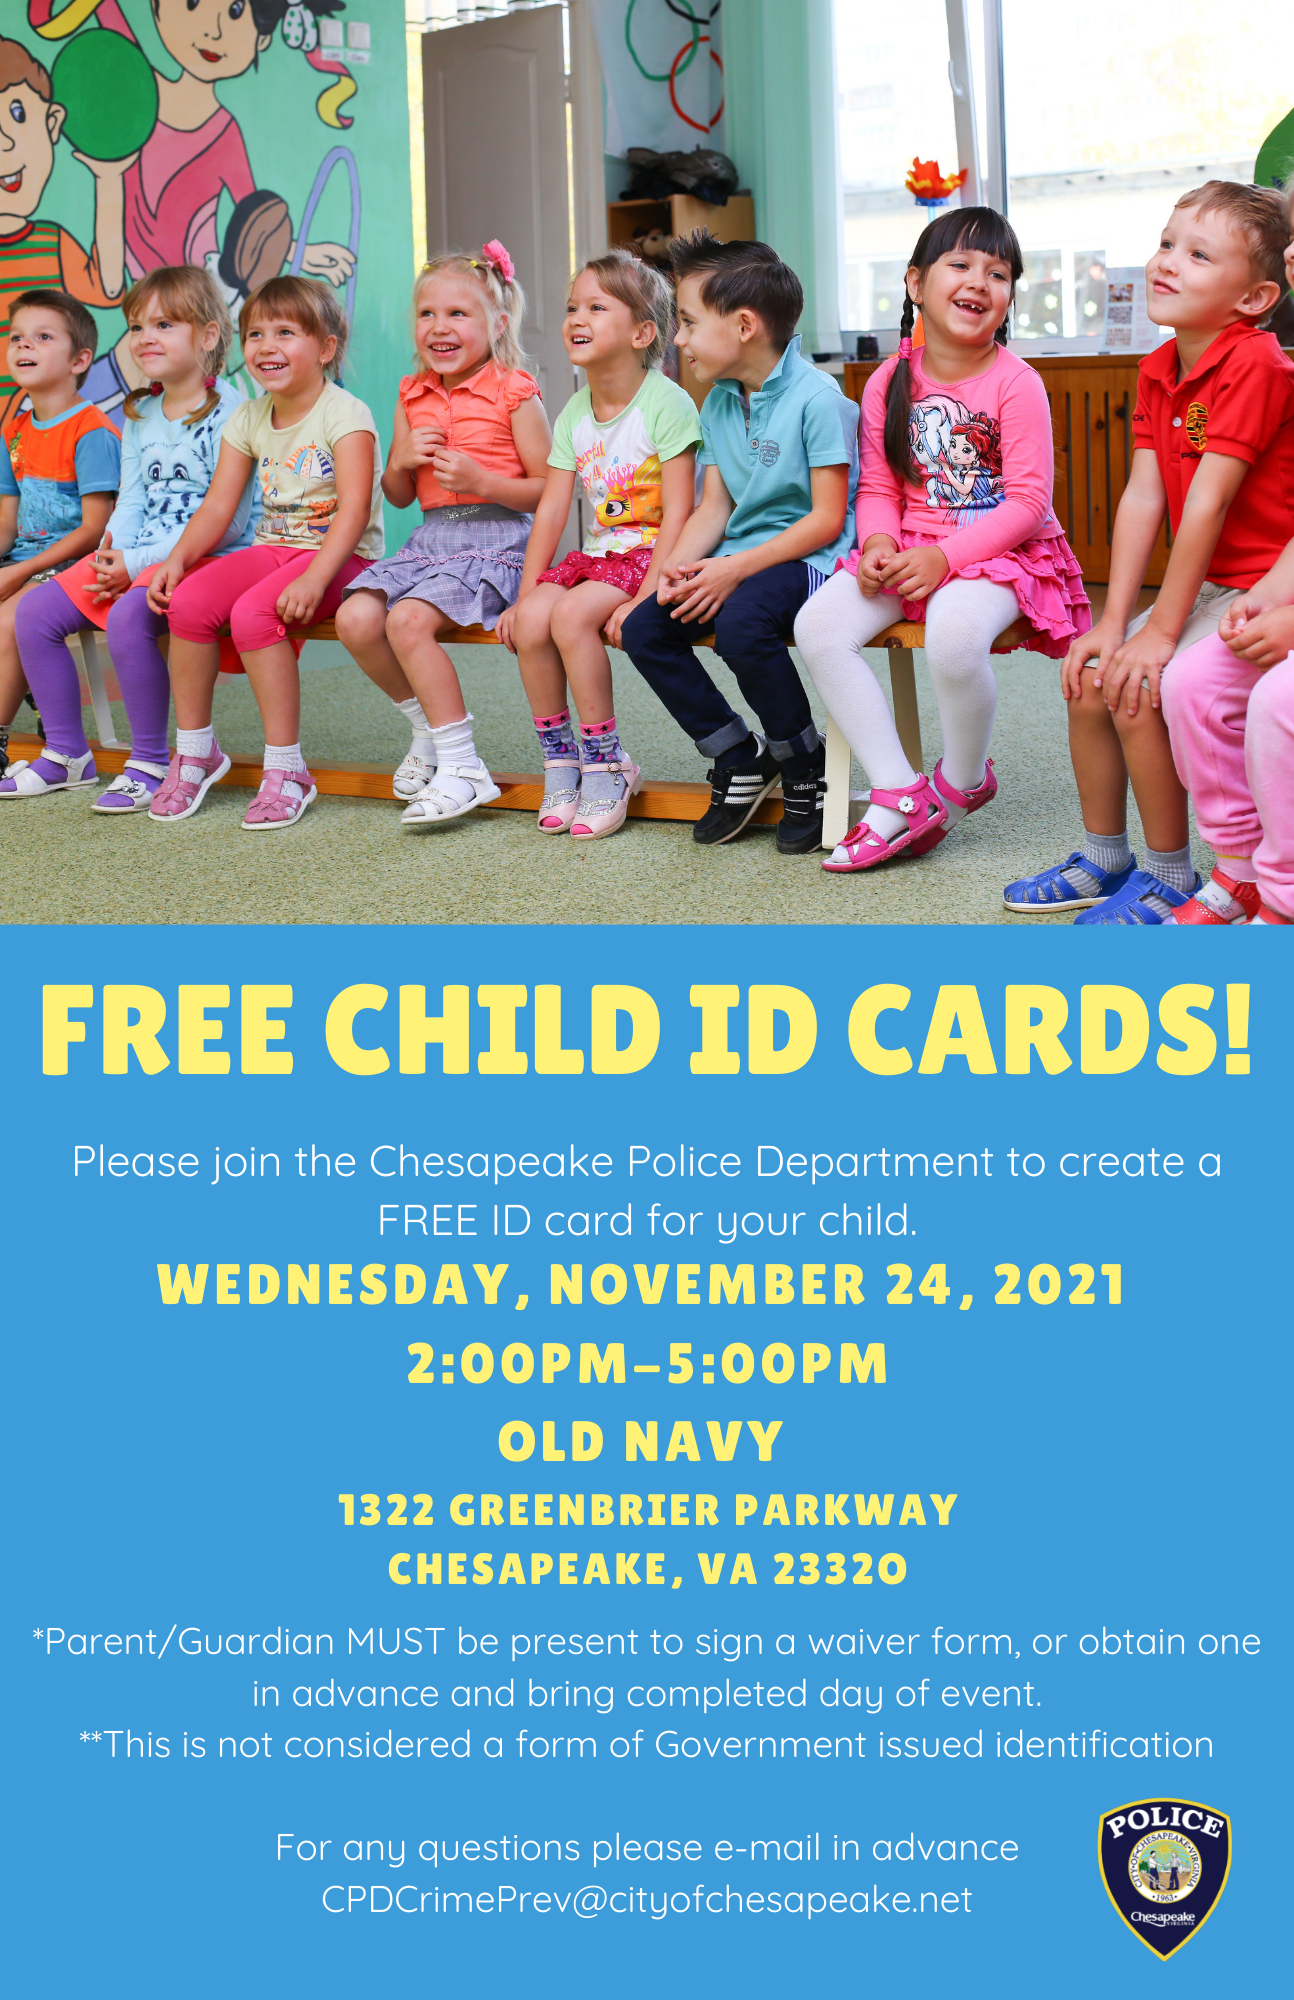 free-child-id-cards-chesapeake-police-department-nextdoor-nextdoor